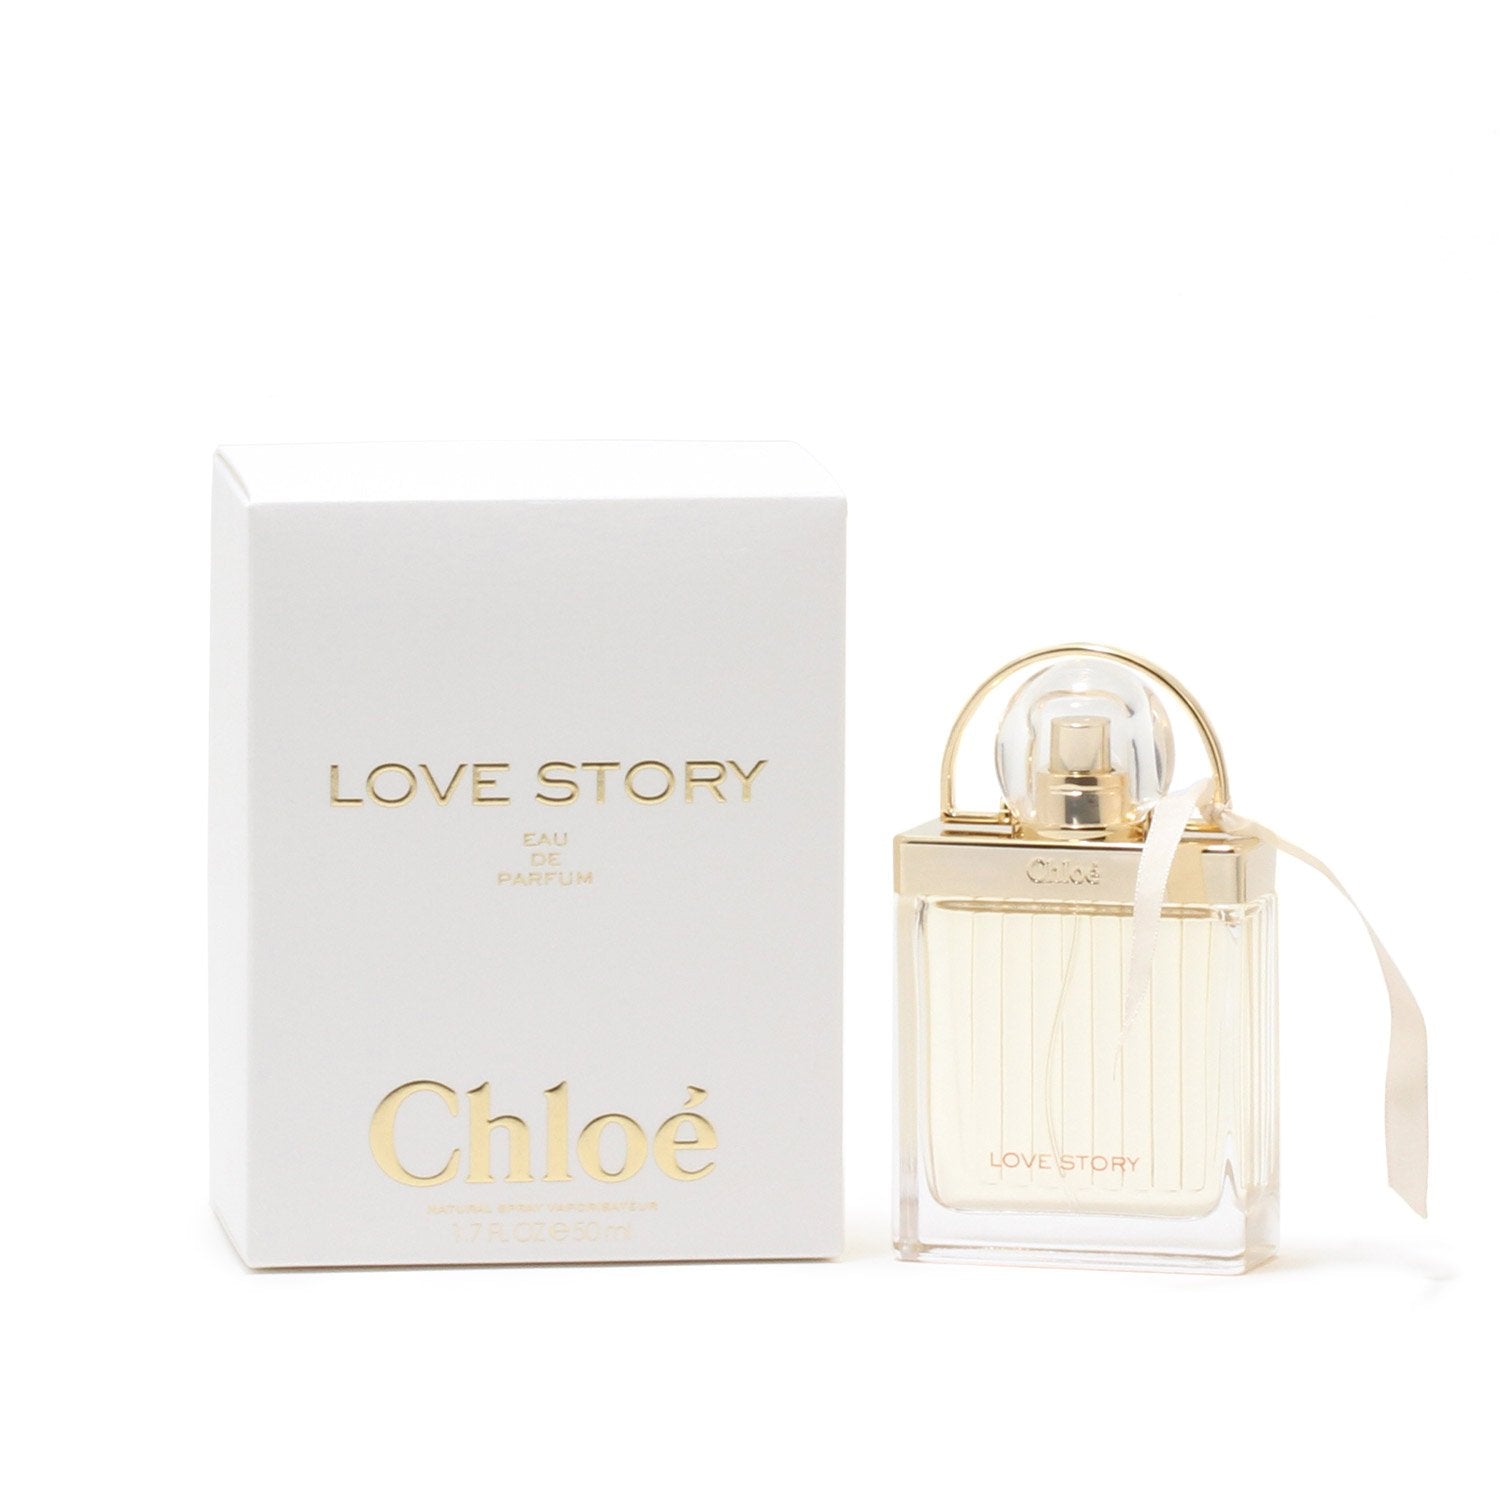 Perfume - CHLOE LOVE STORY FOR WOMEN - EAU DE PARFUM SPRAY